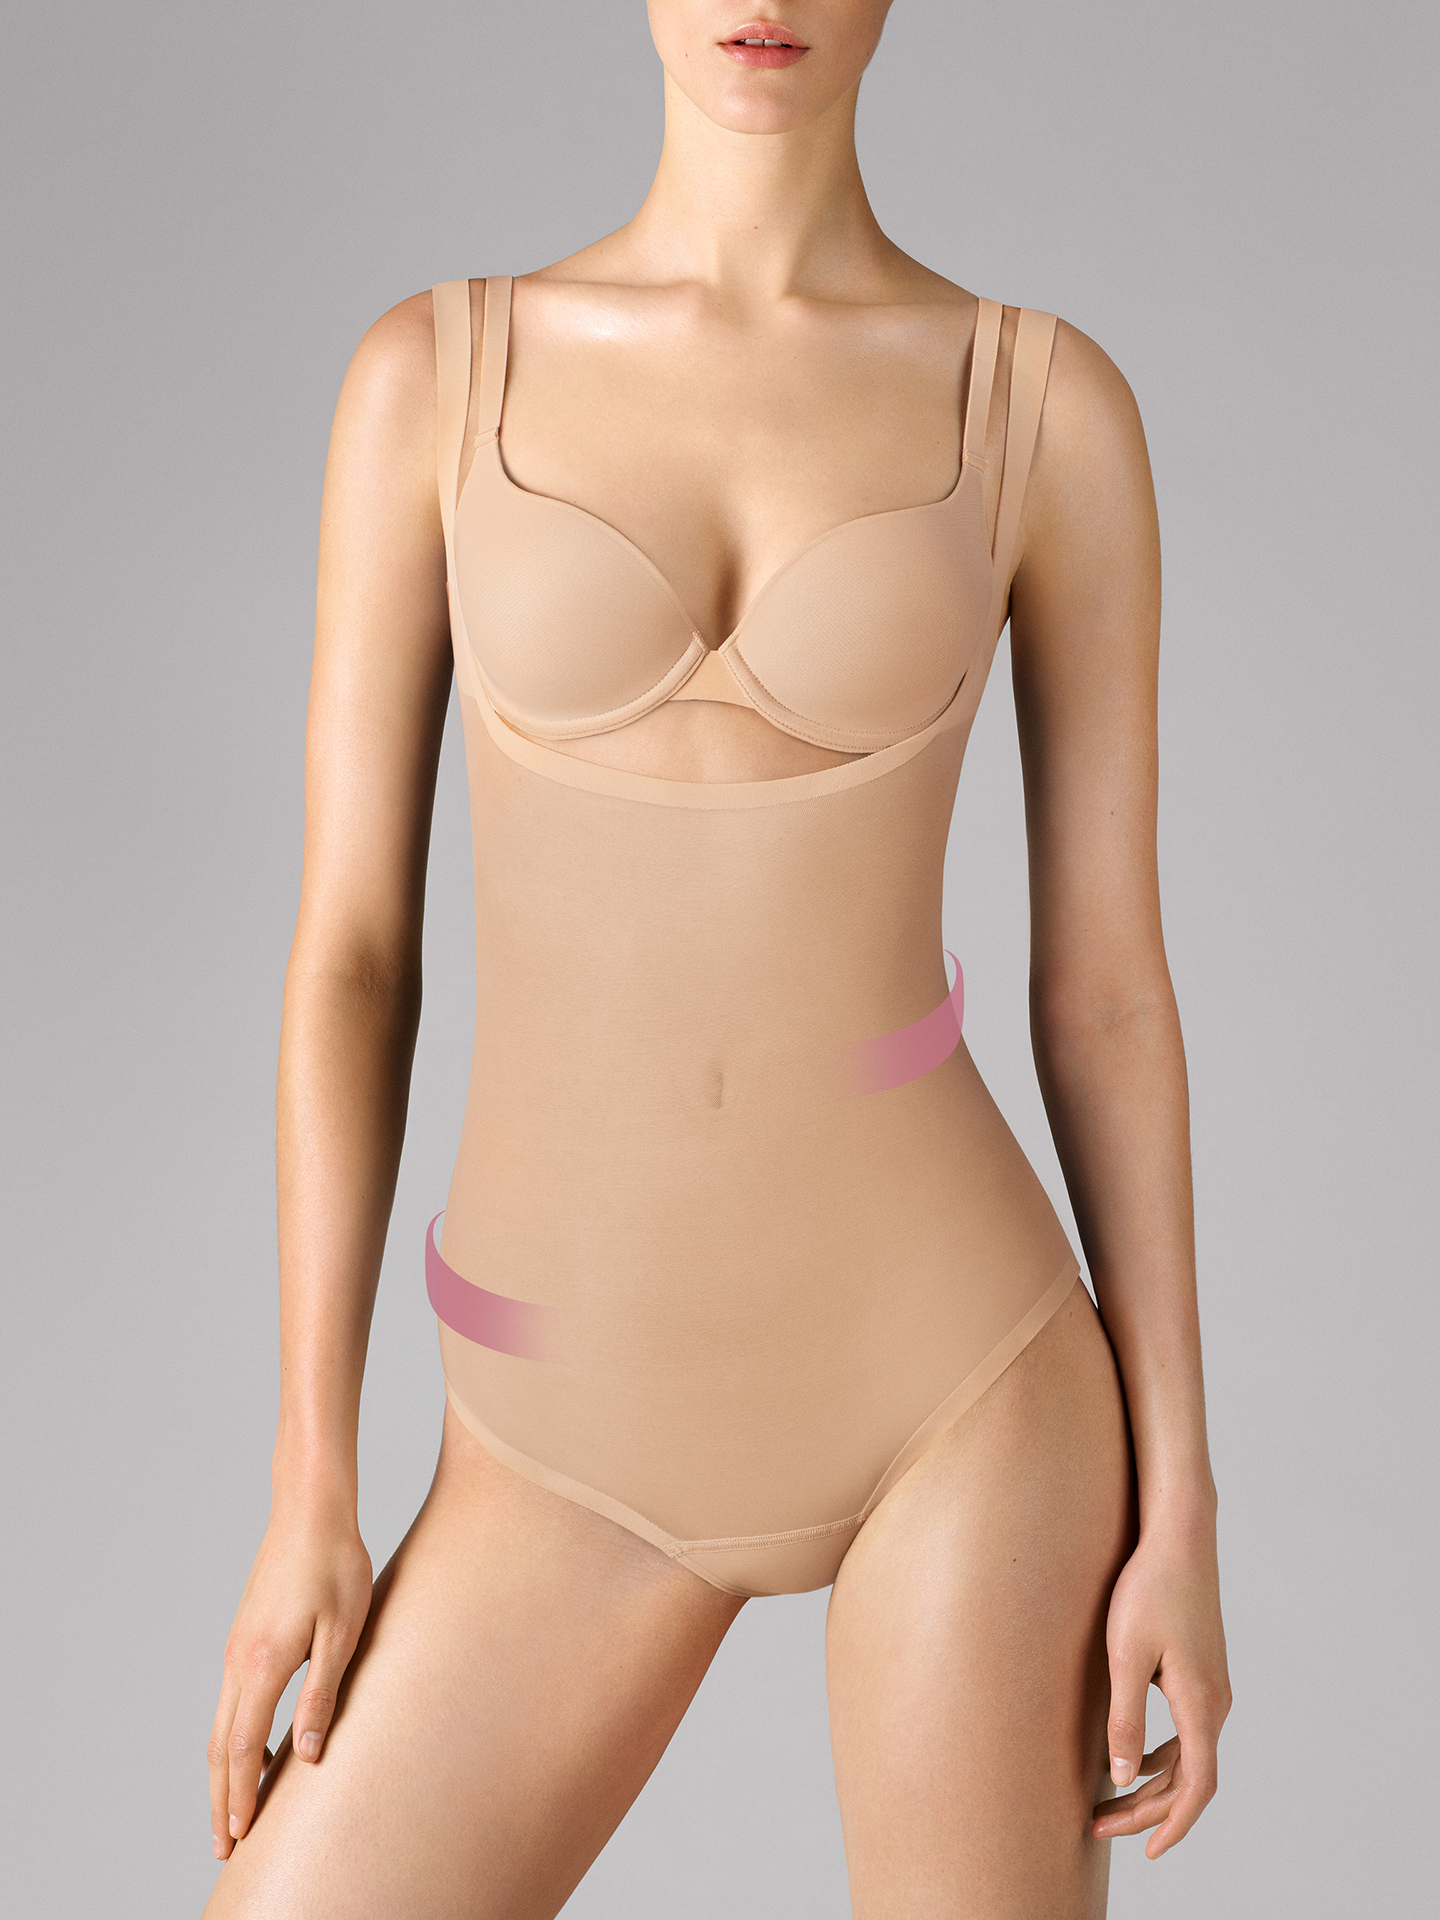 Wolford – Tulle Forming String Body, Frau, nude, Größe: 38